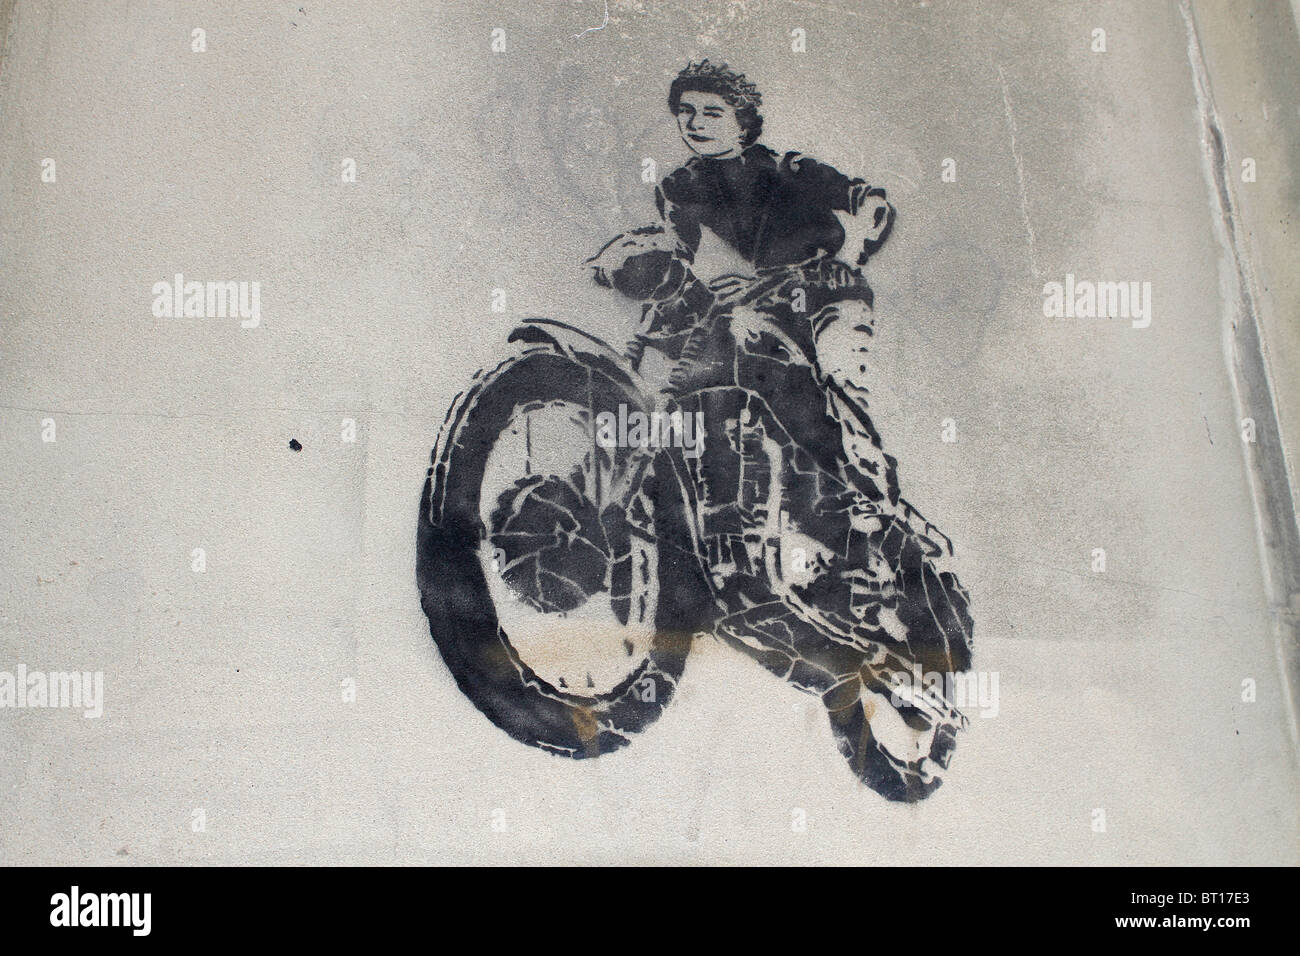 McQueen Schablone Greffiti, Queen Elizabeth 2. Motorrad springen aus dem Film große Flucht, street-Art-London, UK Stockfoto